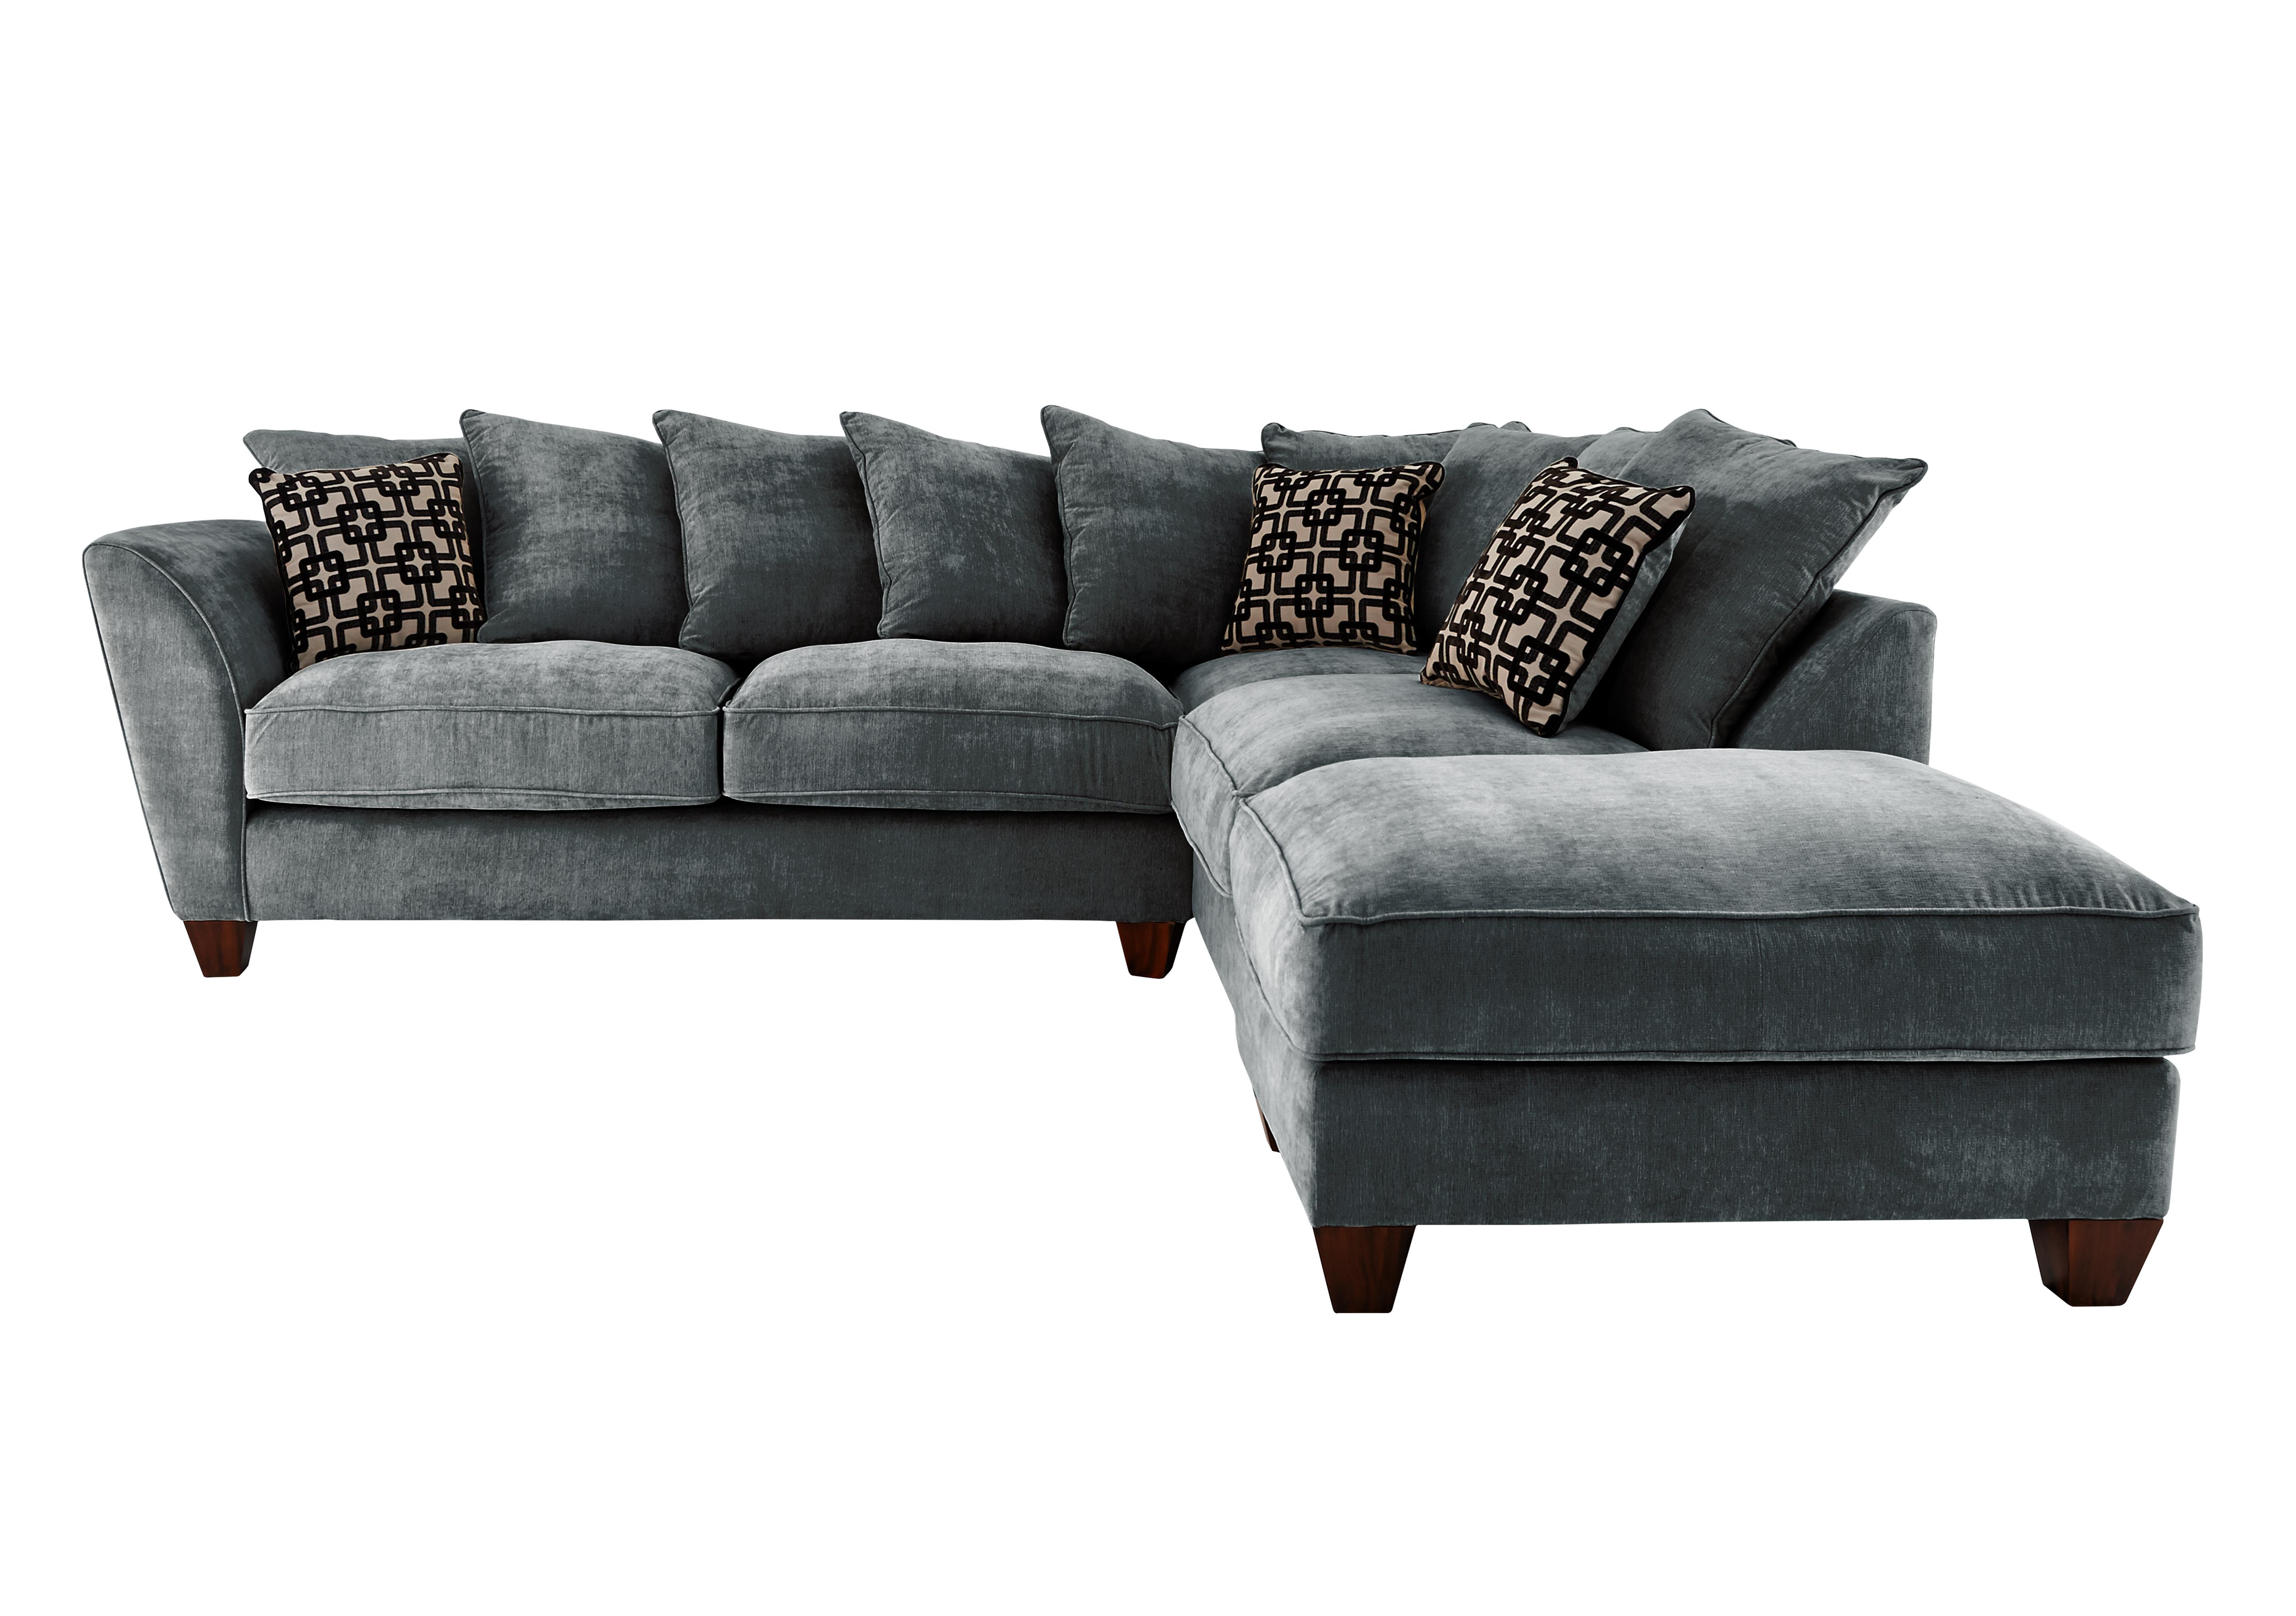 Grey corner sofa for you
living room